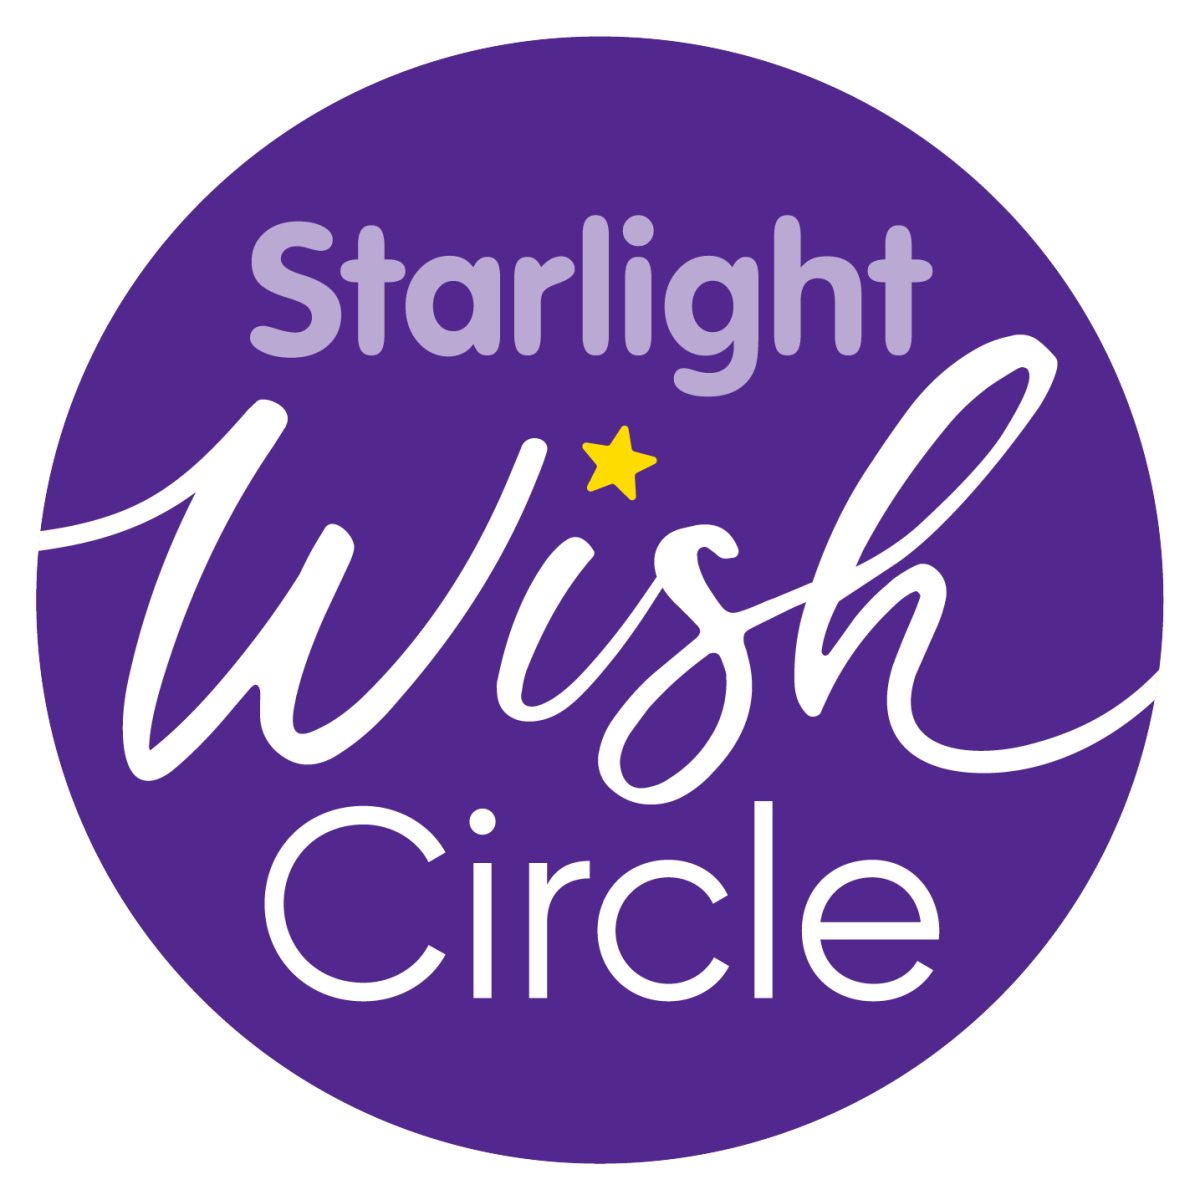 Starlight Wish Circle logo for banner